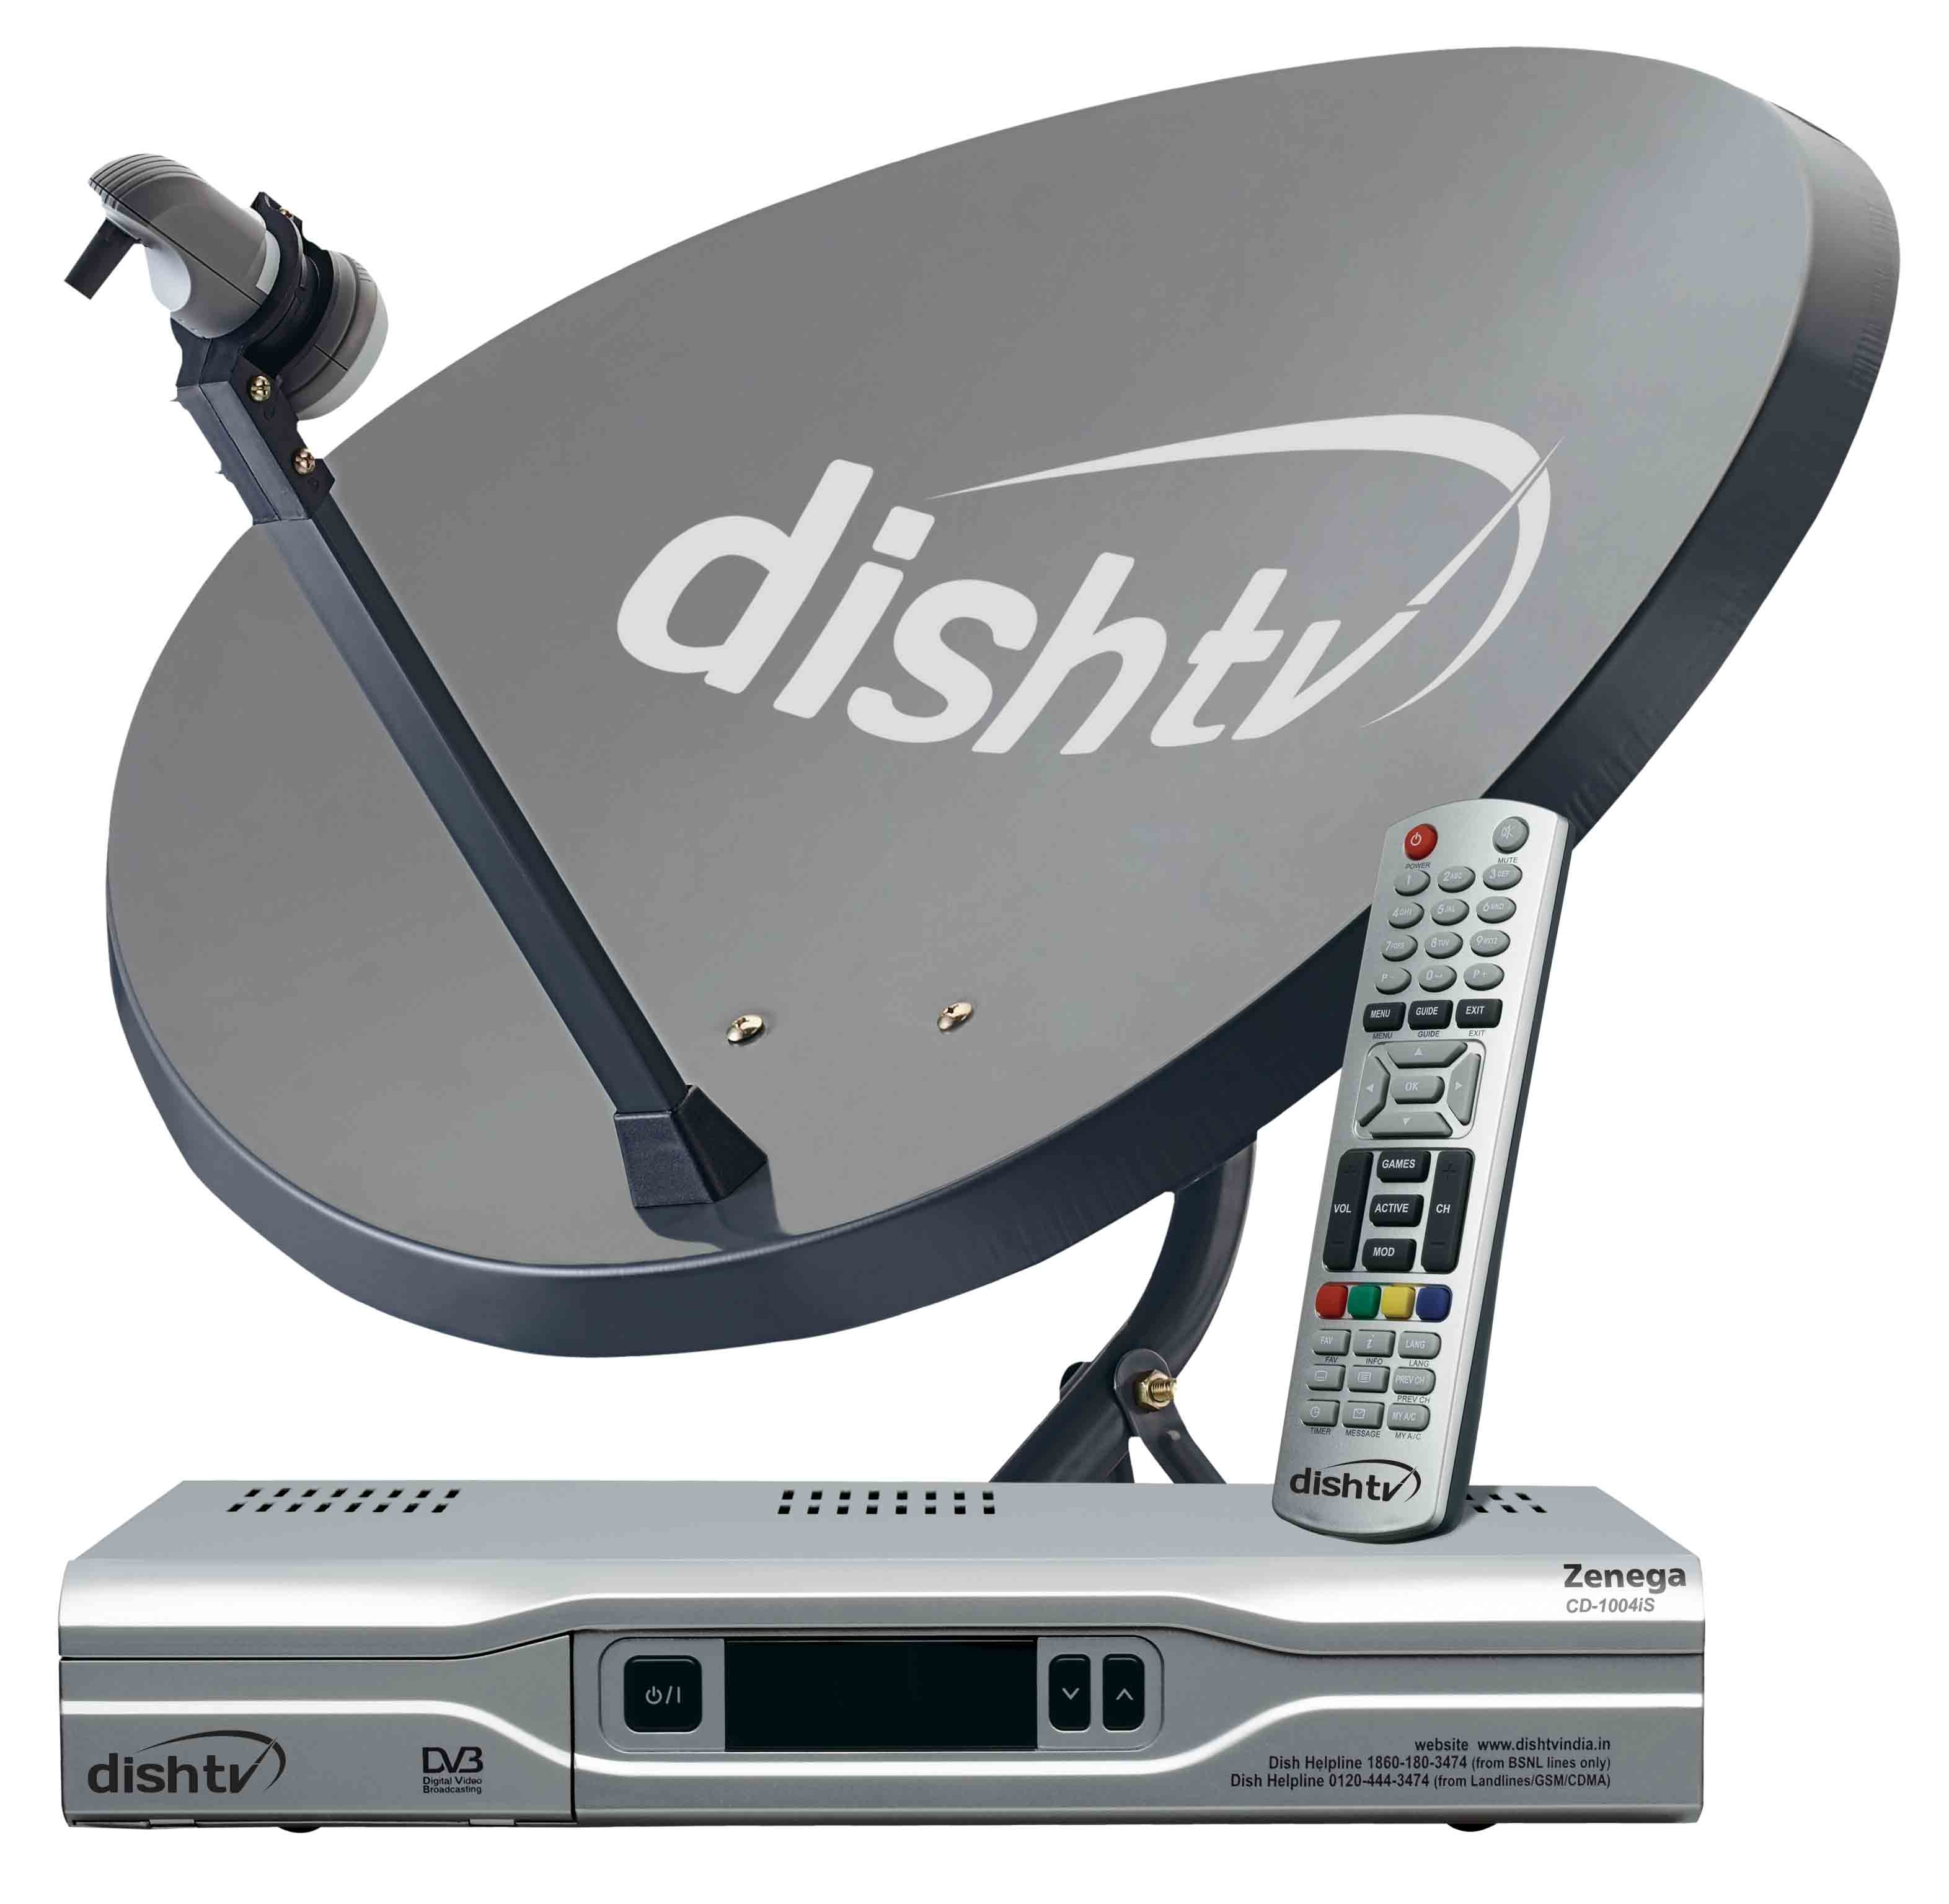 dish tv browser